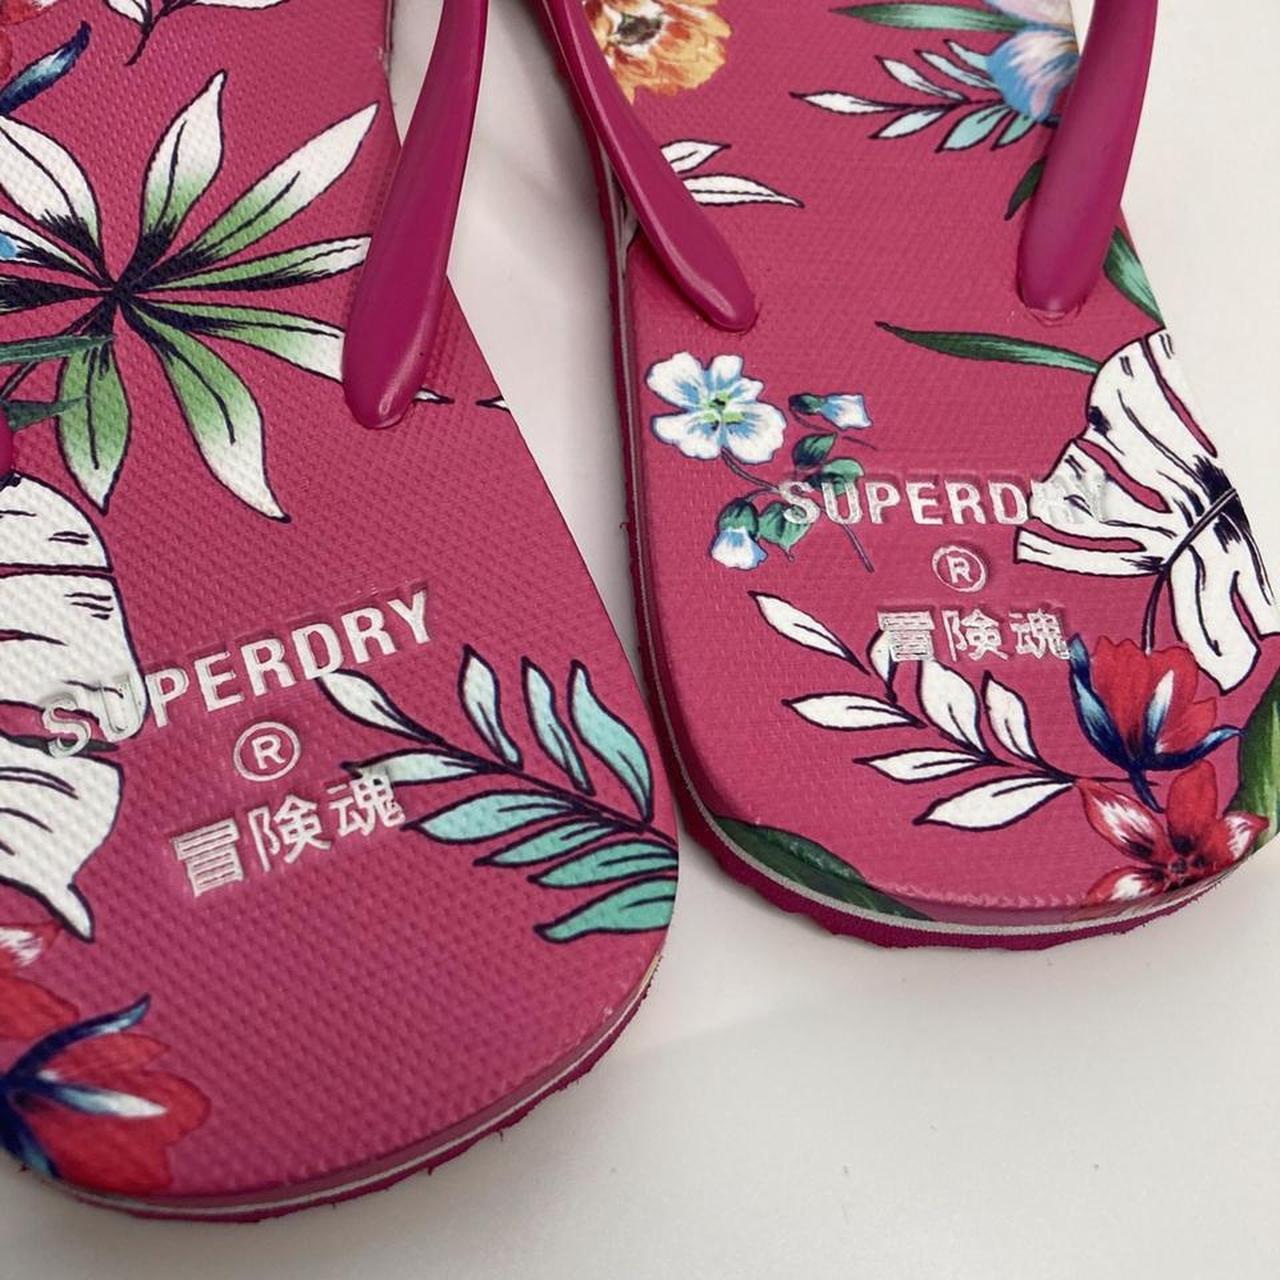 Superdry Women's Arizona Flatform Slide Sandals - Optic | Allsole